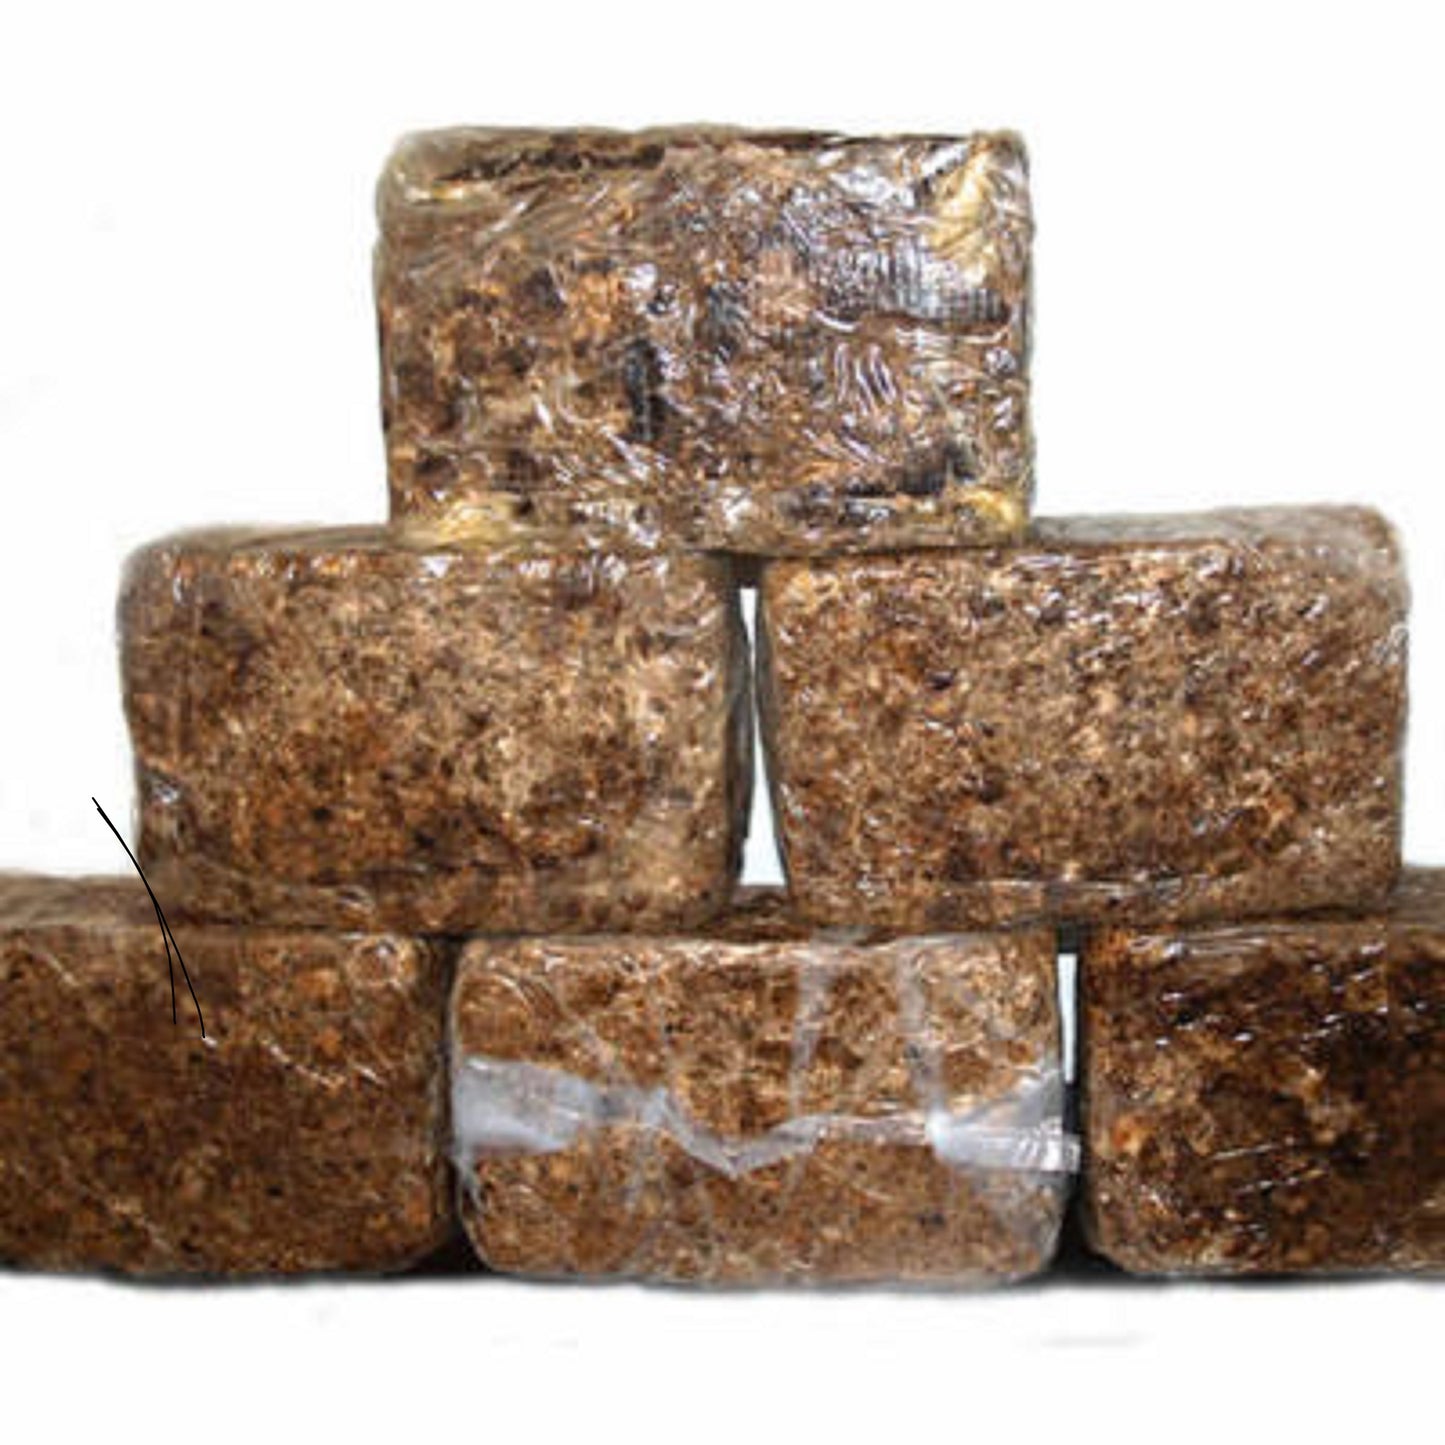 100% Raw Natural African Black Soap 1.3 LB 3 x 200g Bar Soap